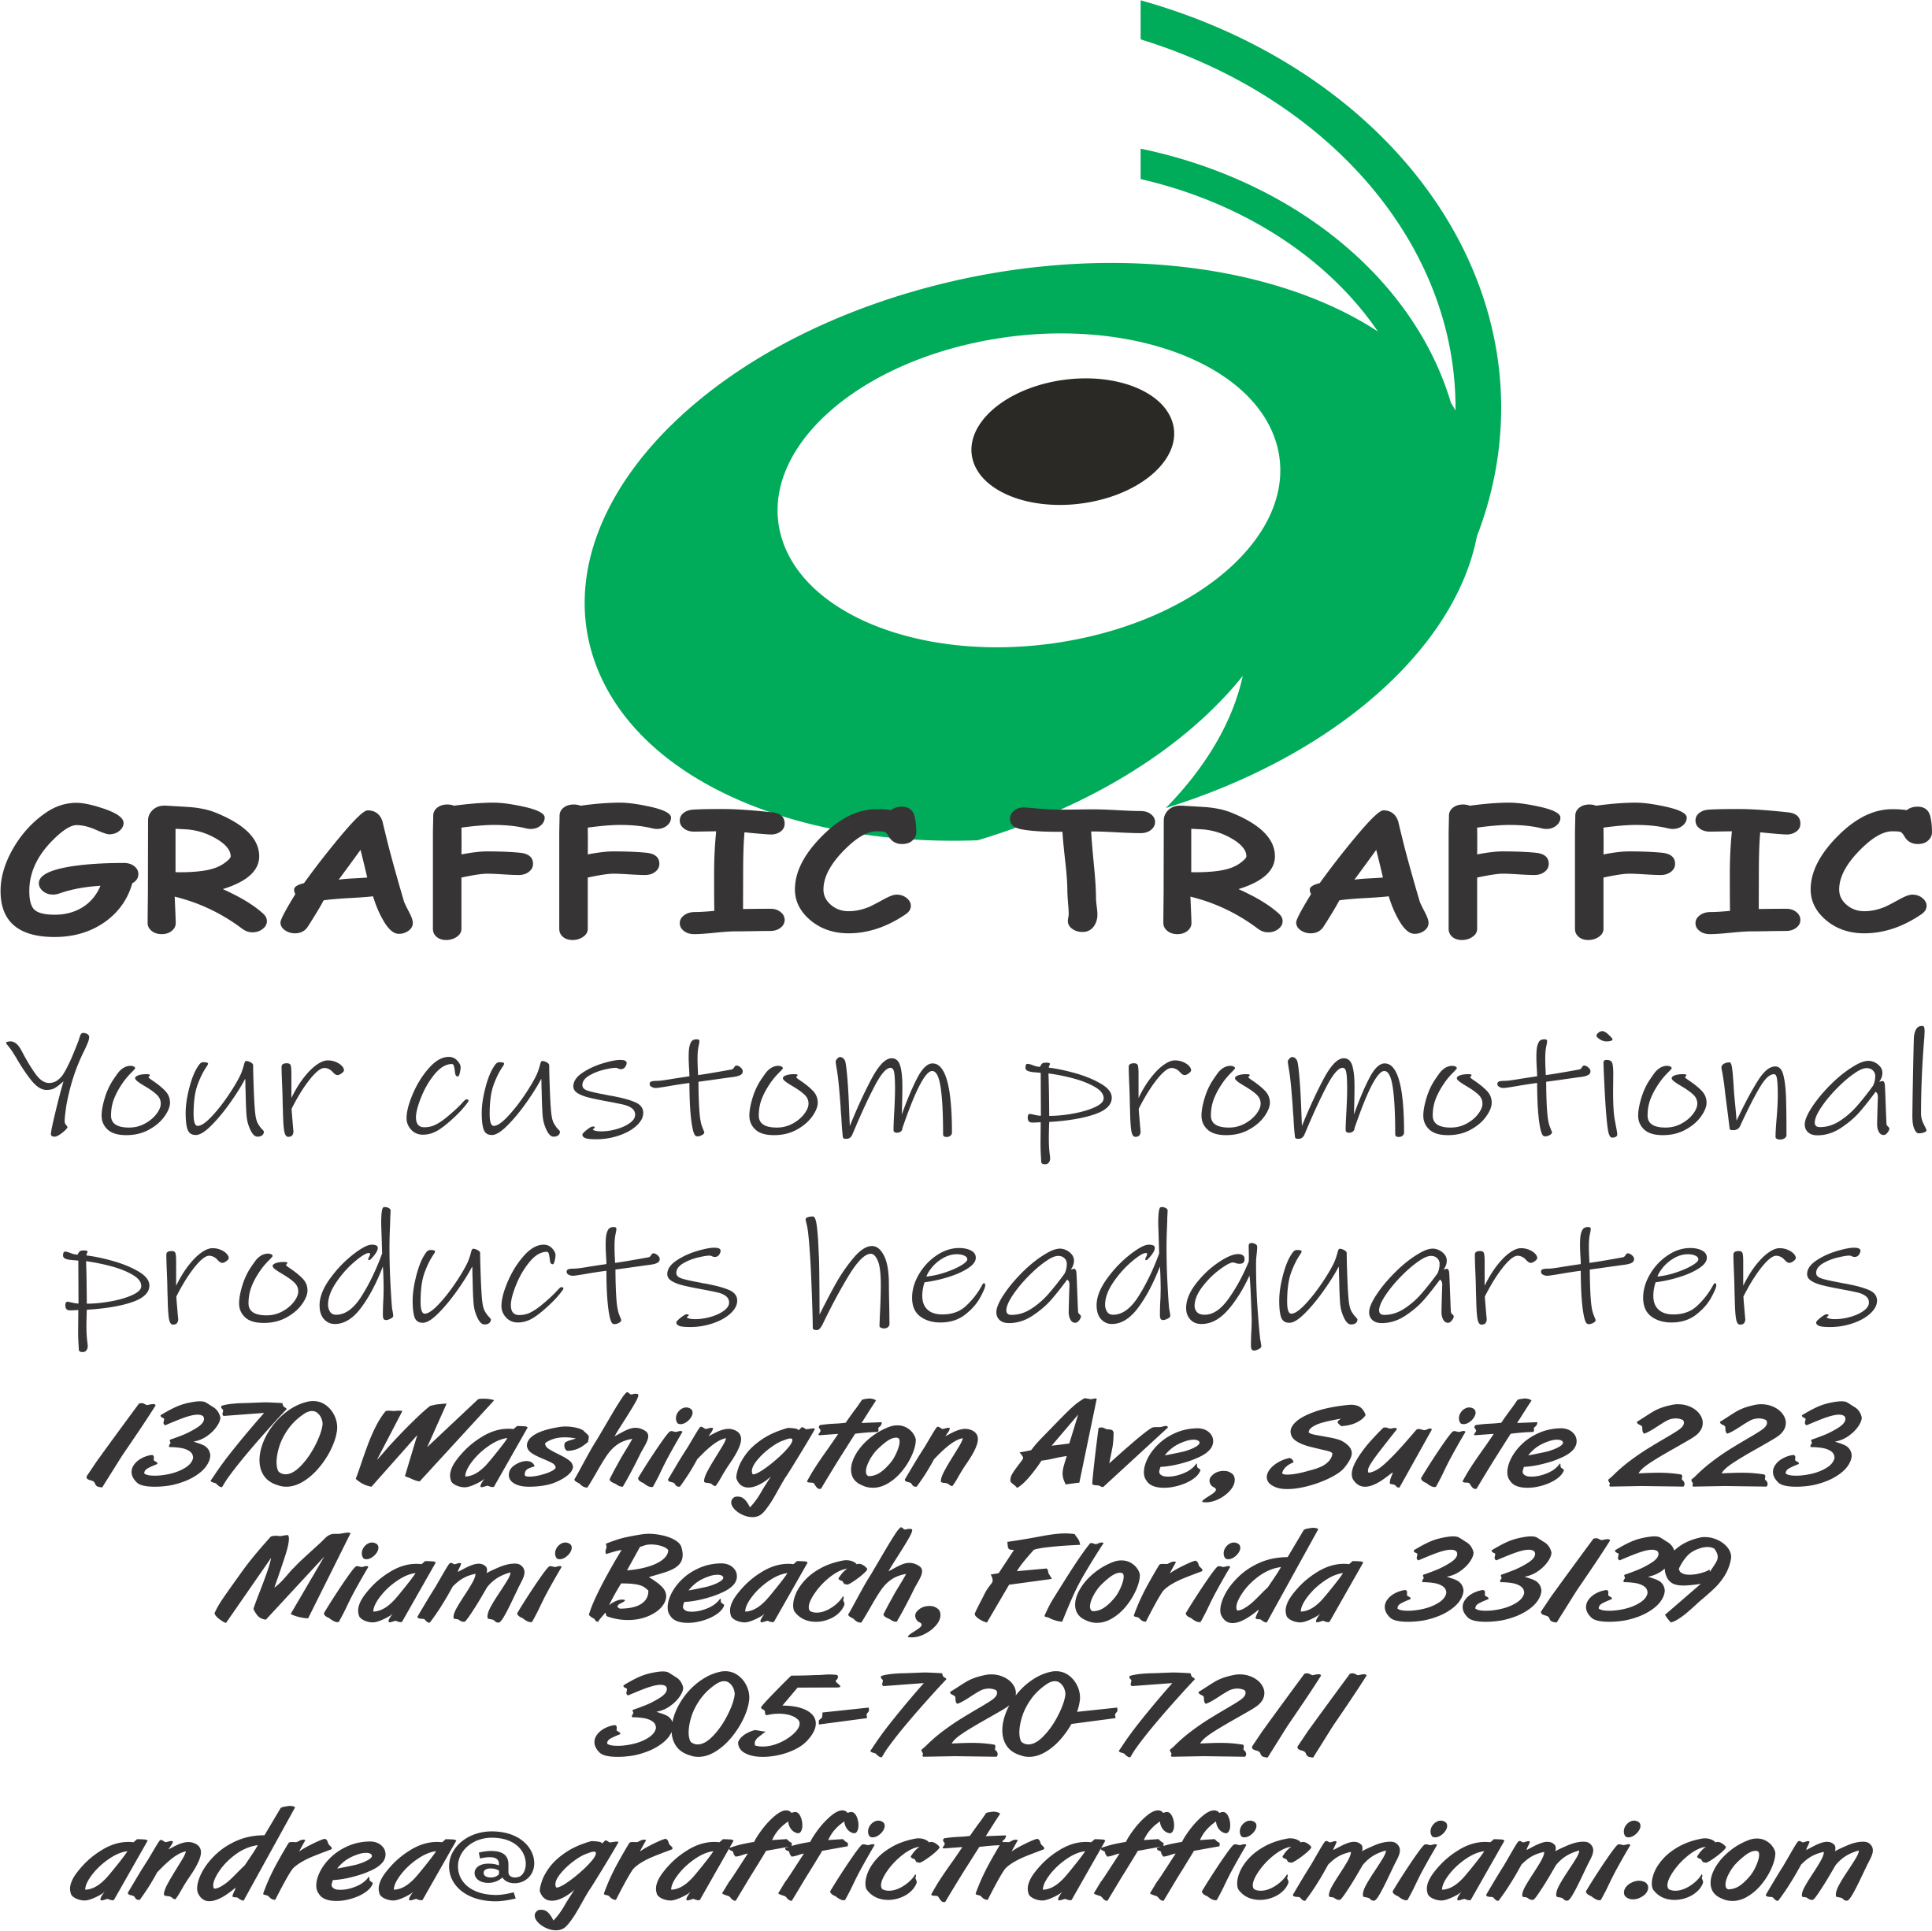 Graffic Traffic Inc's Logo